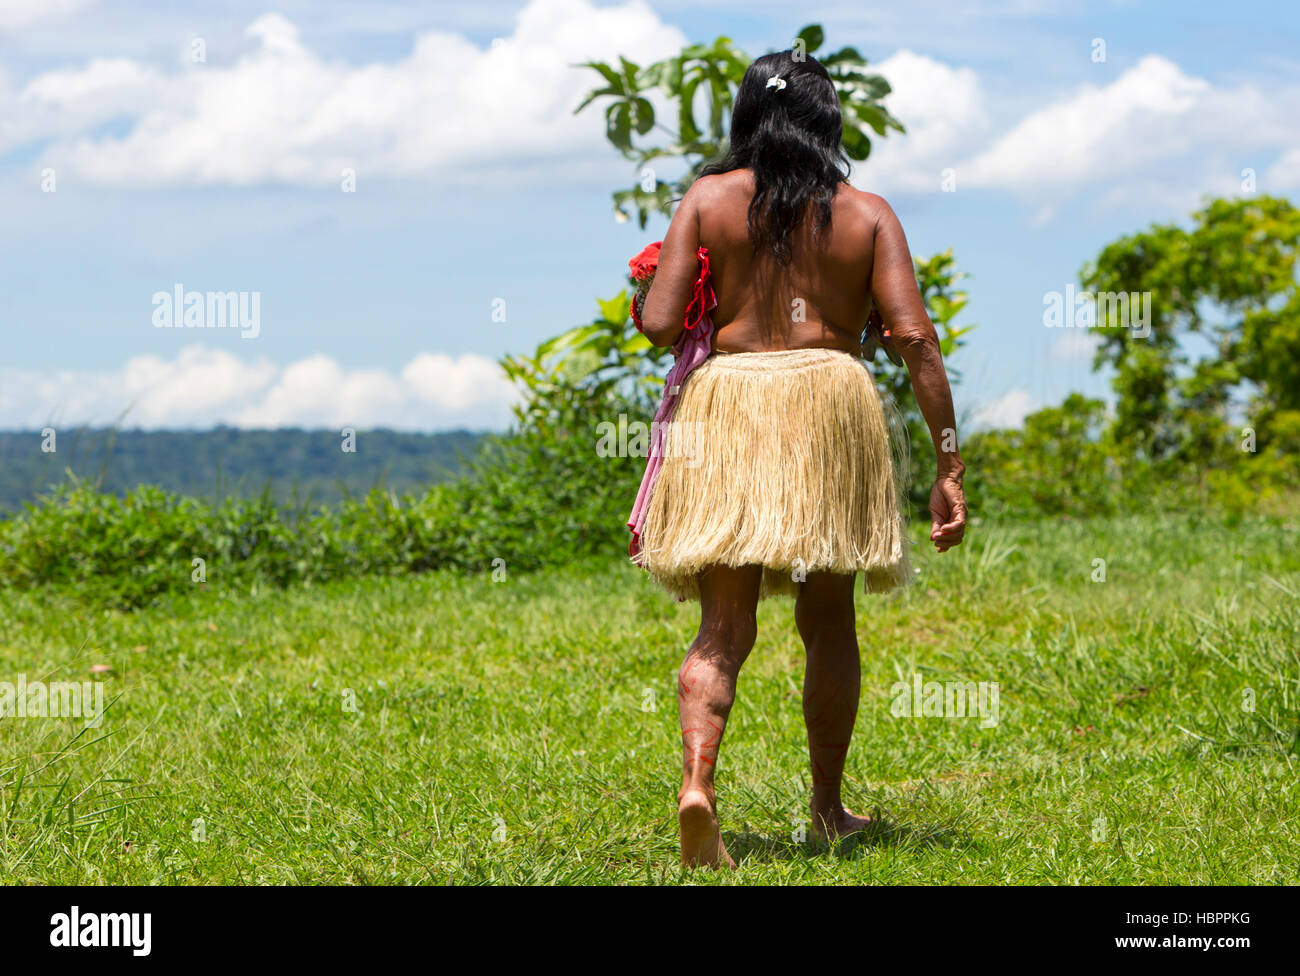 Brazilian indian woman from tribe in Amazon, Brazil Stock Photo